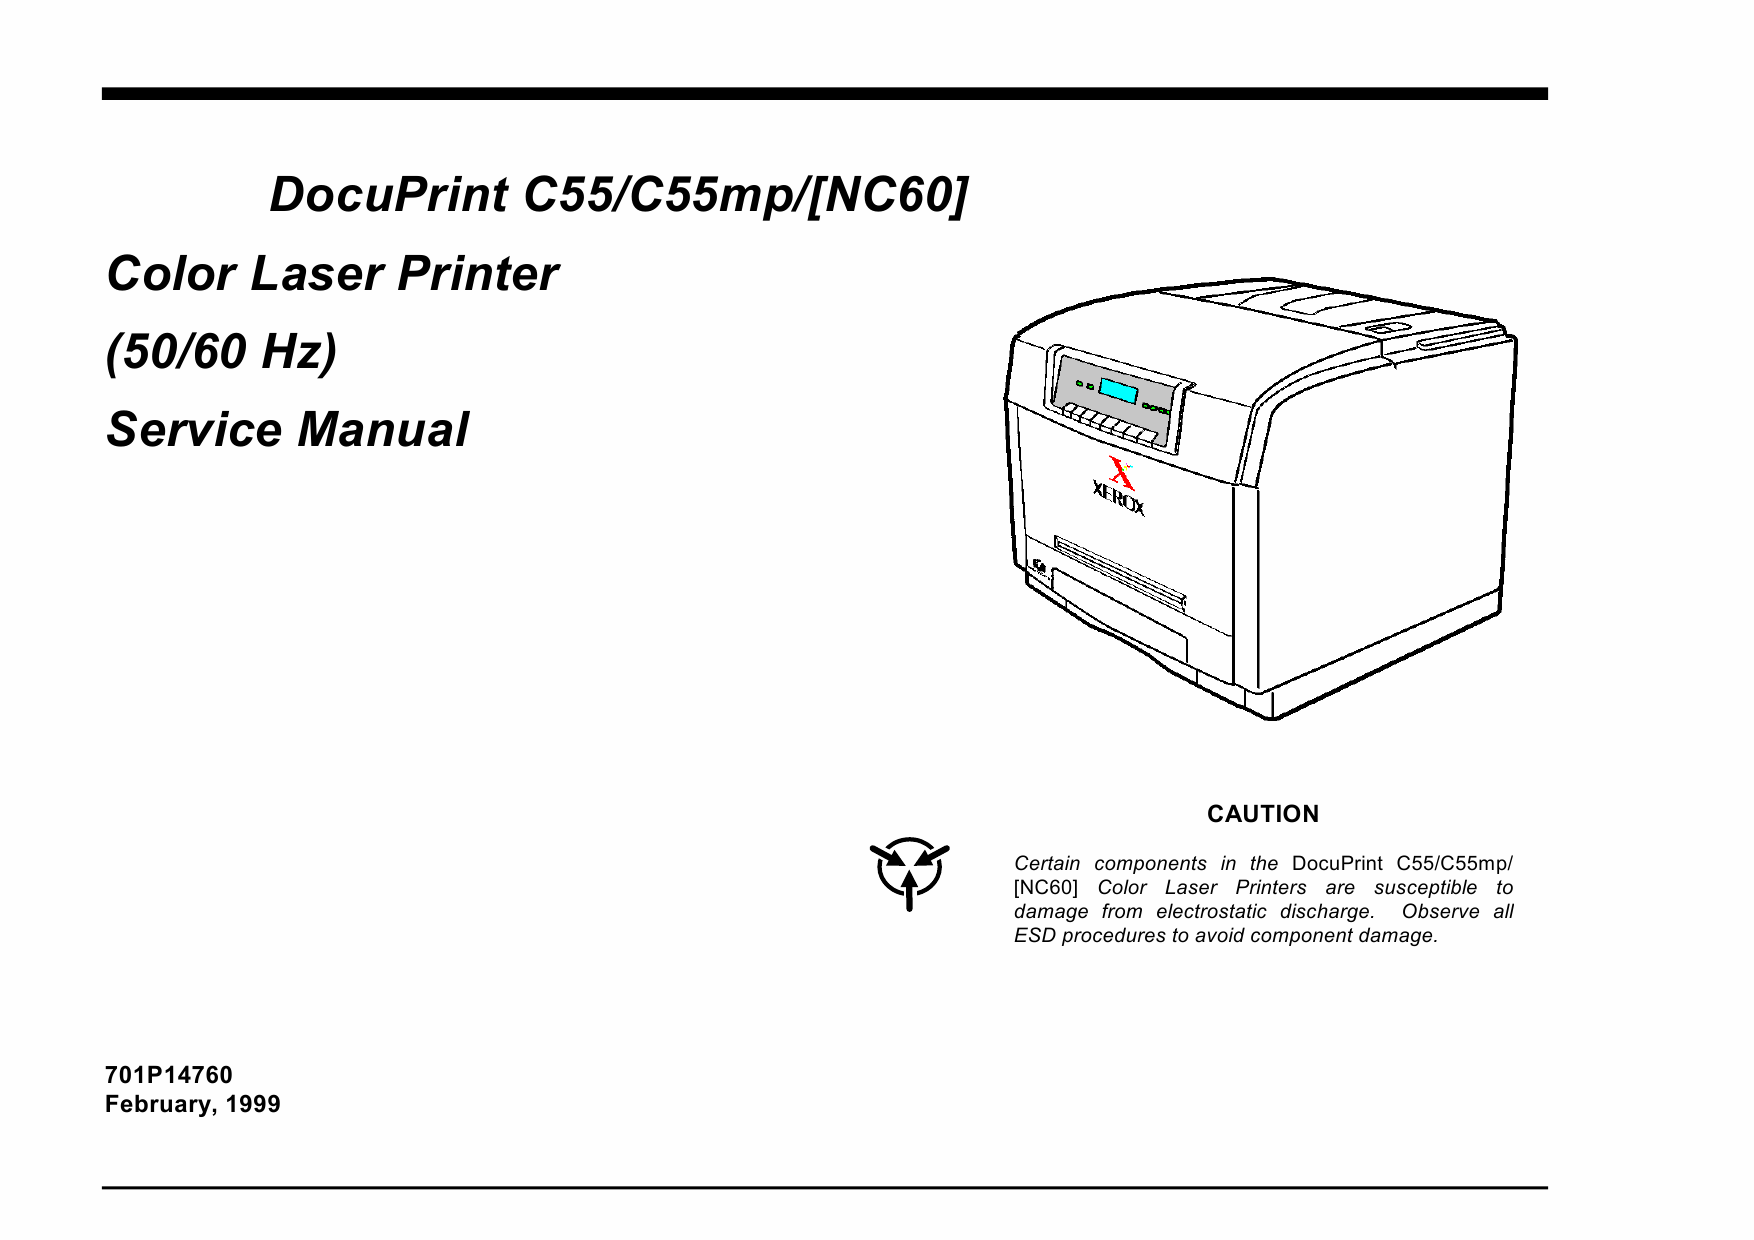 Xerox DocuPrint C55 C44mp NC60 Parts List and Service Manual-1